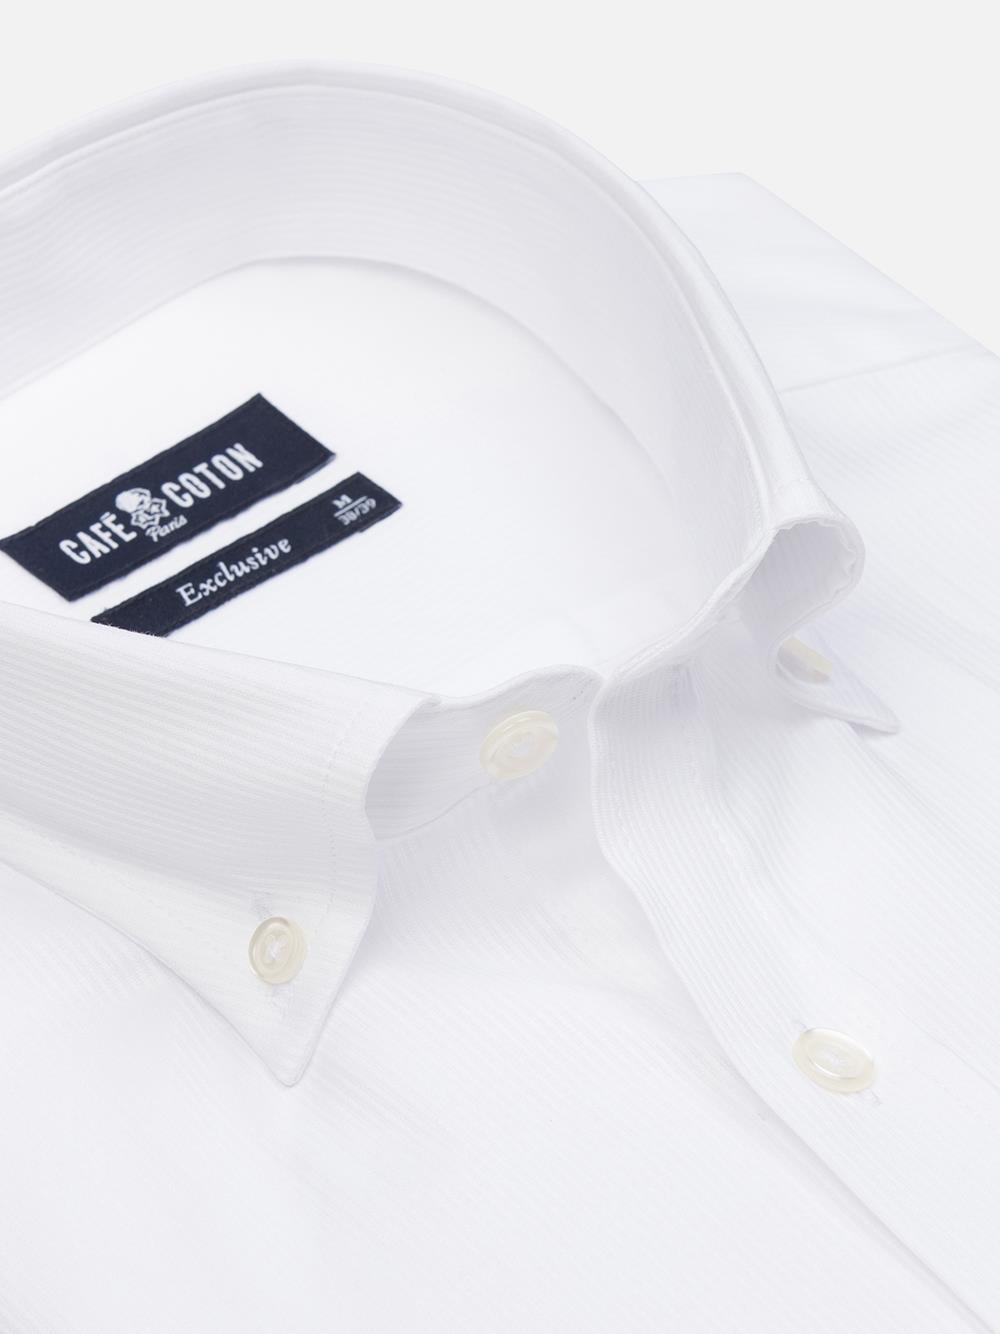 Camisa entallada Piqué Blanco - Cuello Abotonado